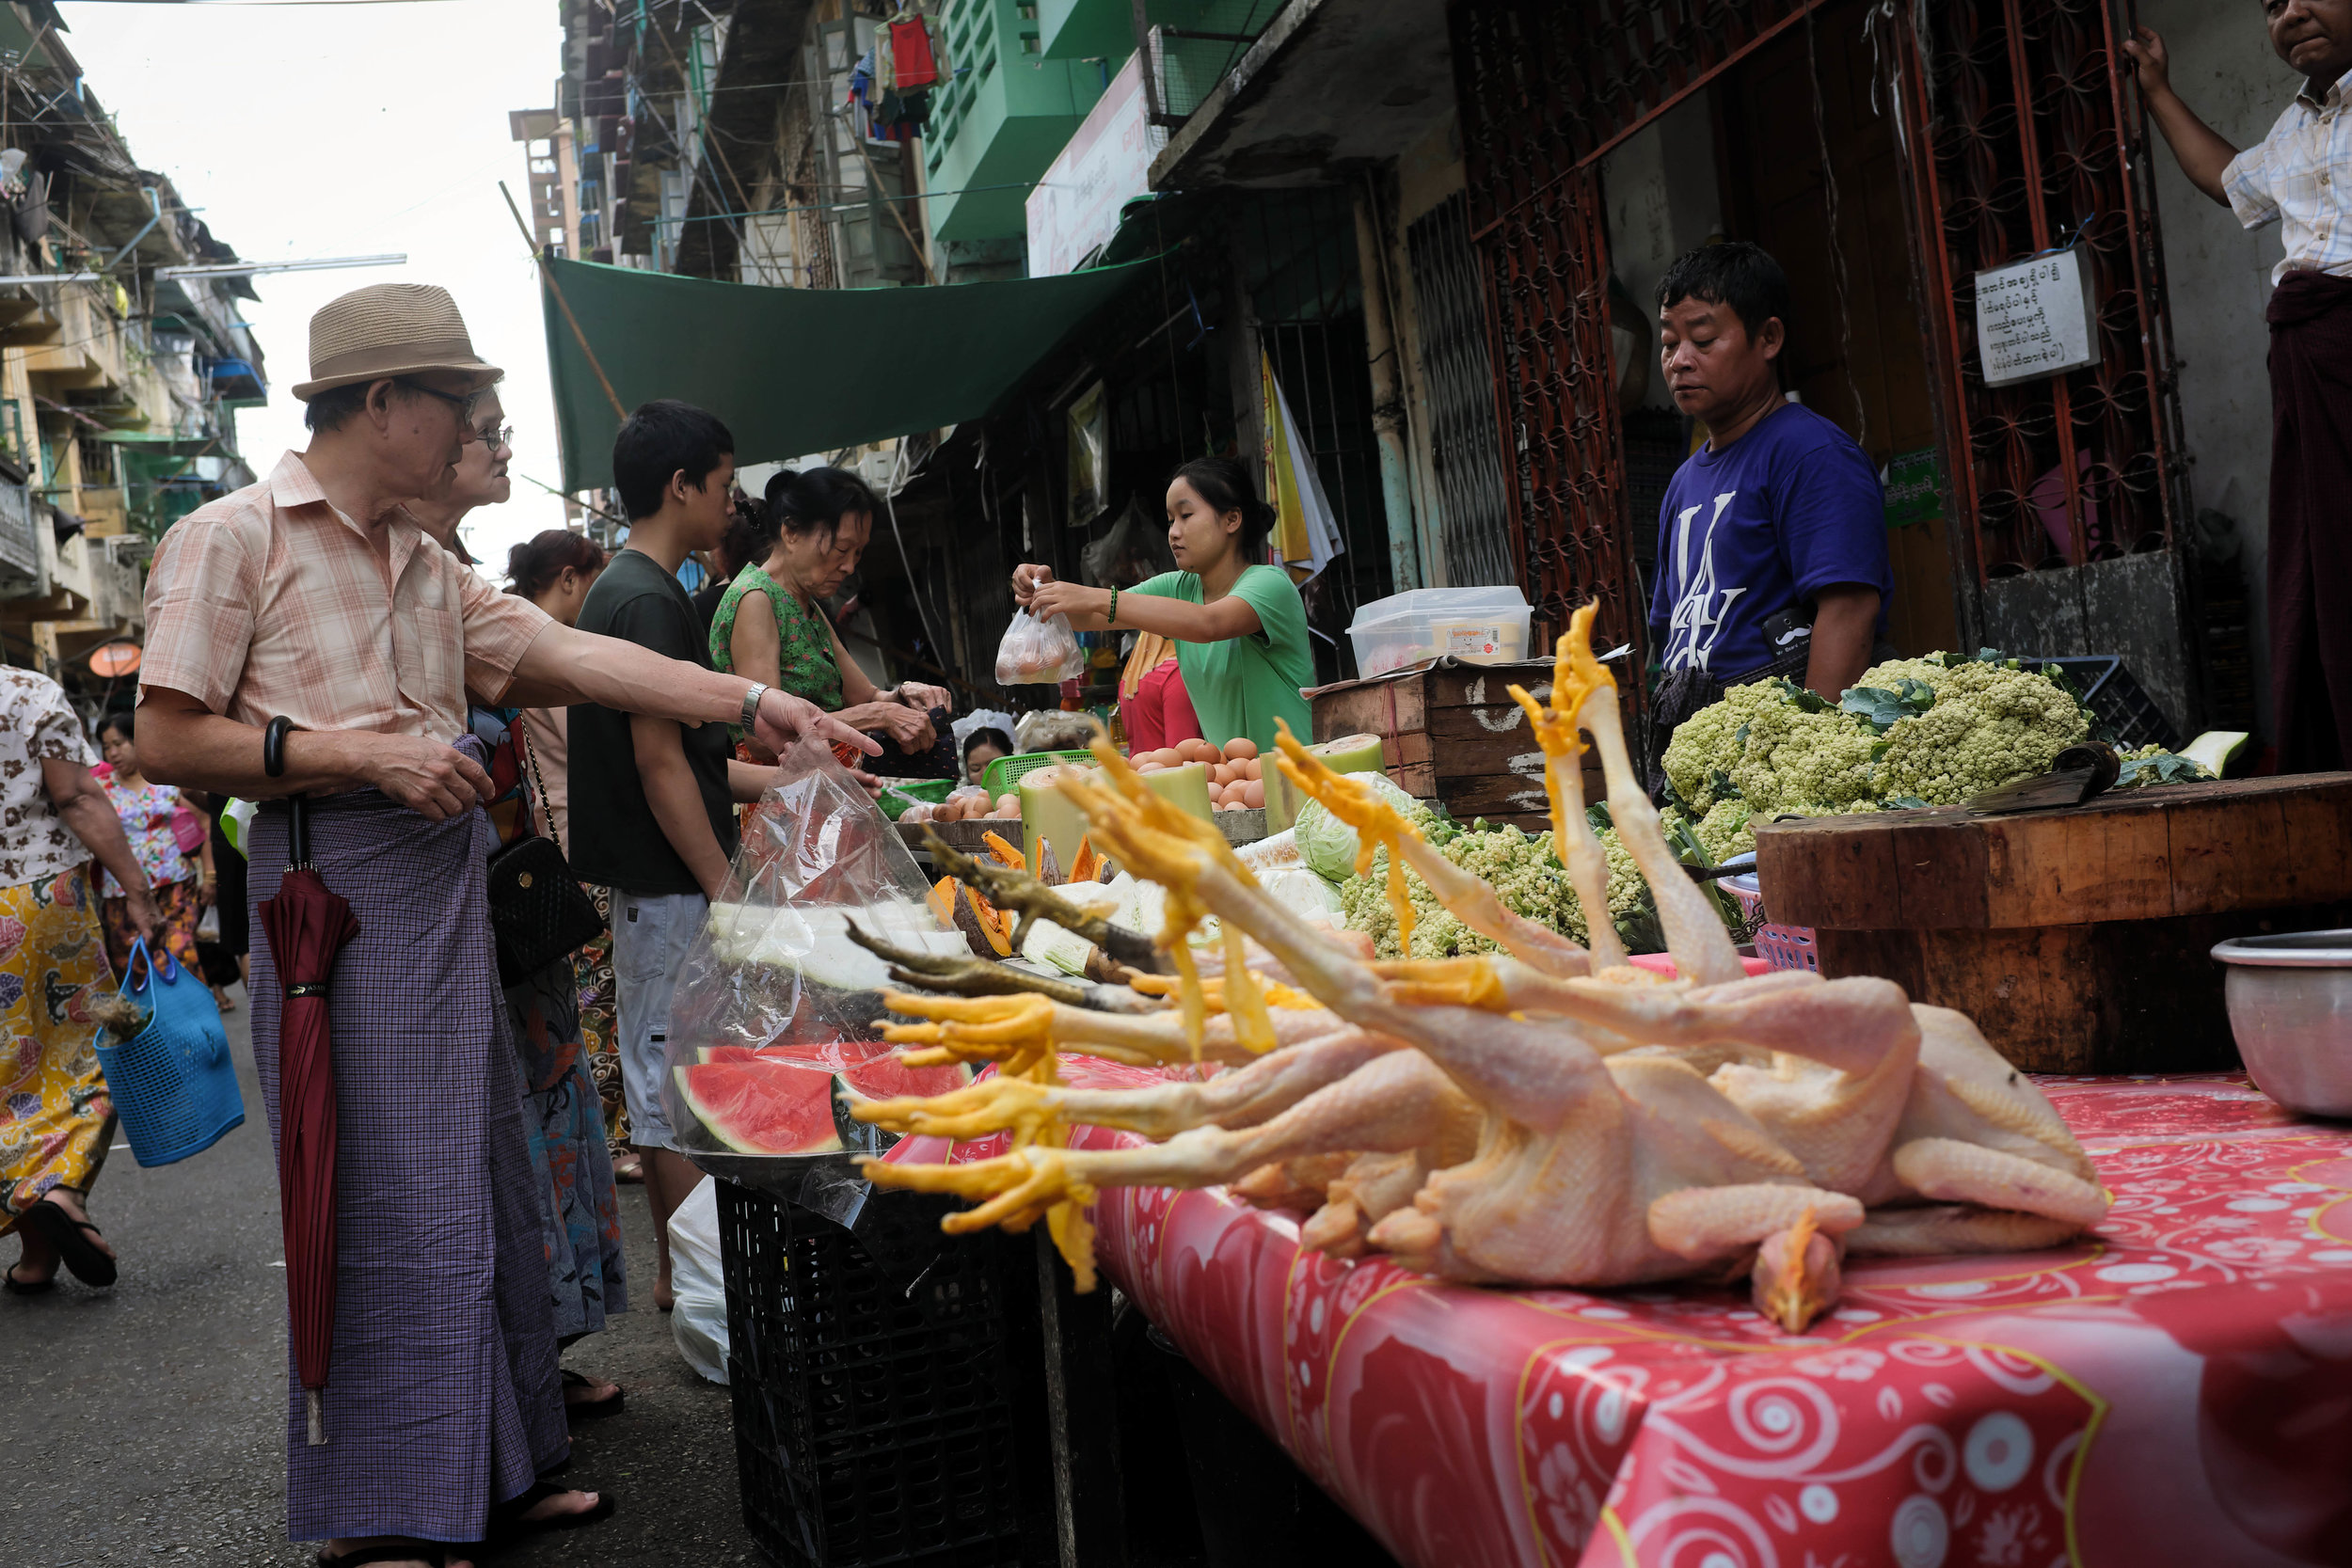 Myanmar "Jungle Chicken" at the market in Yangon